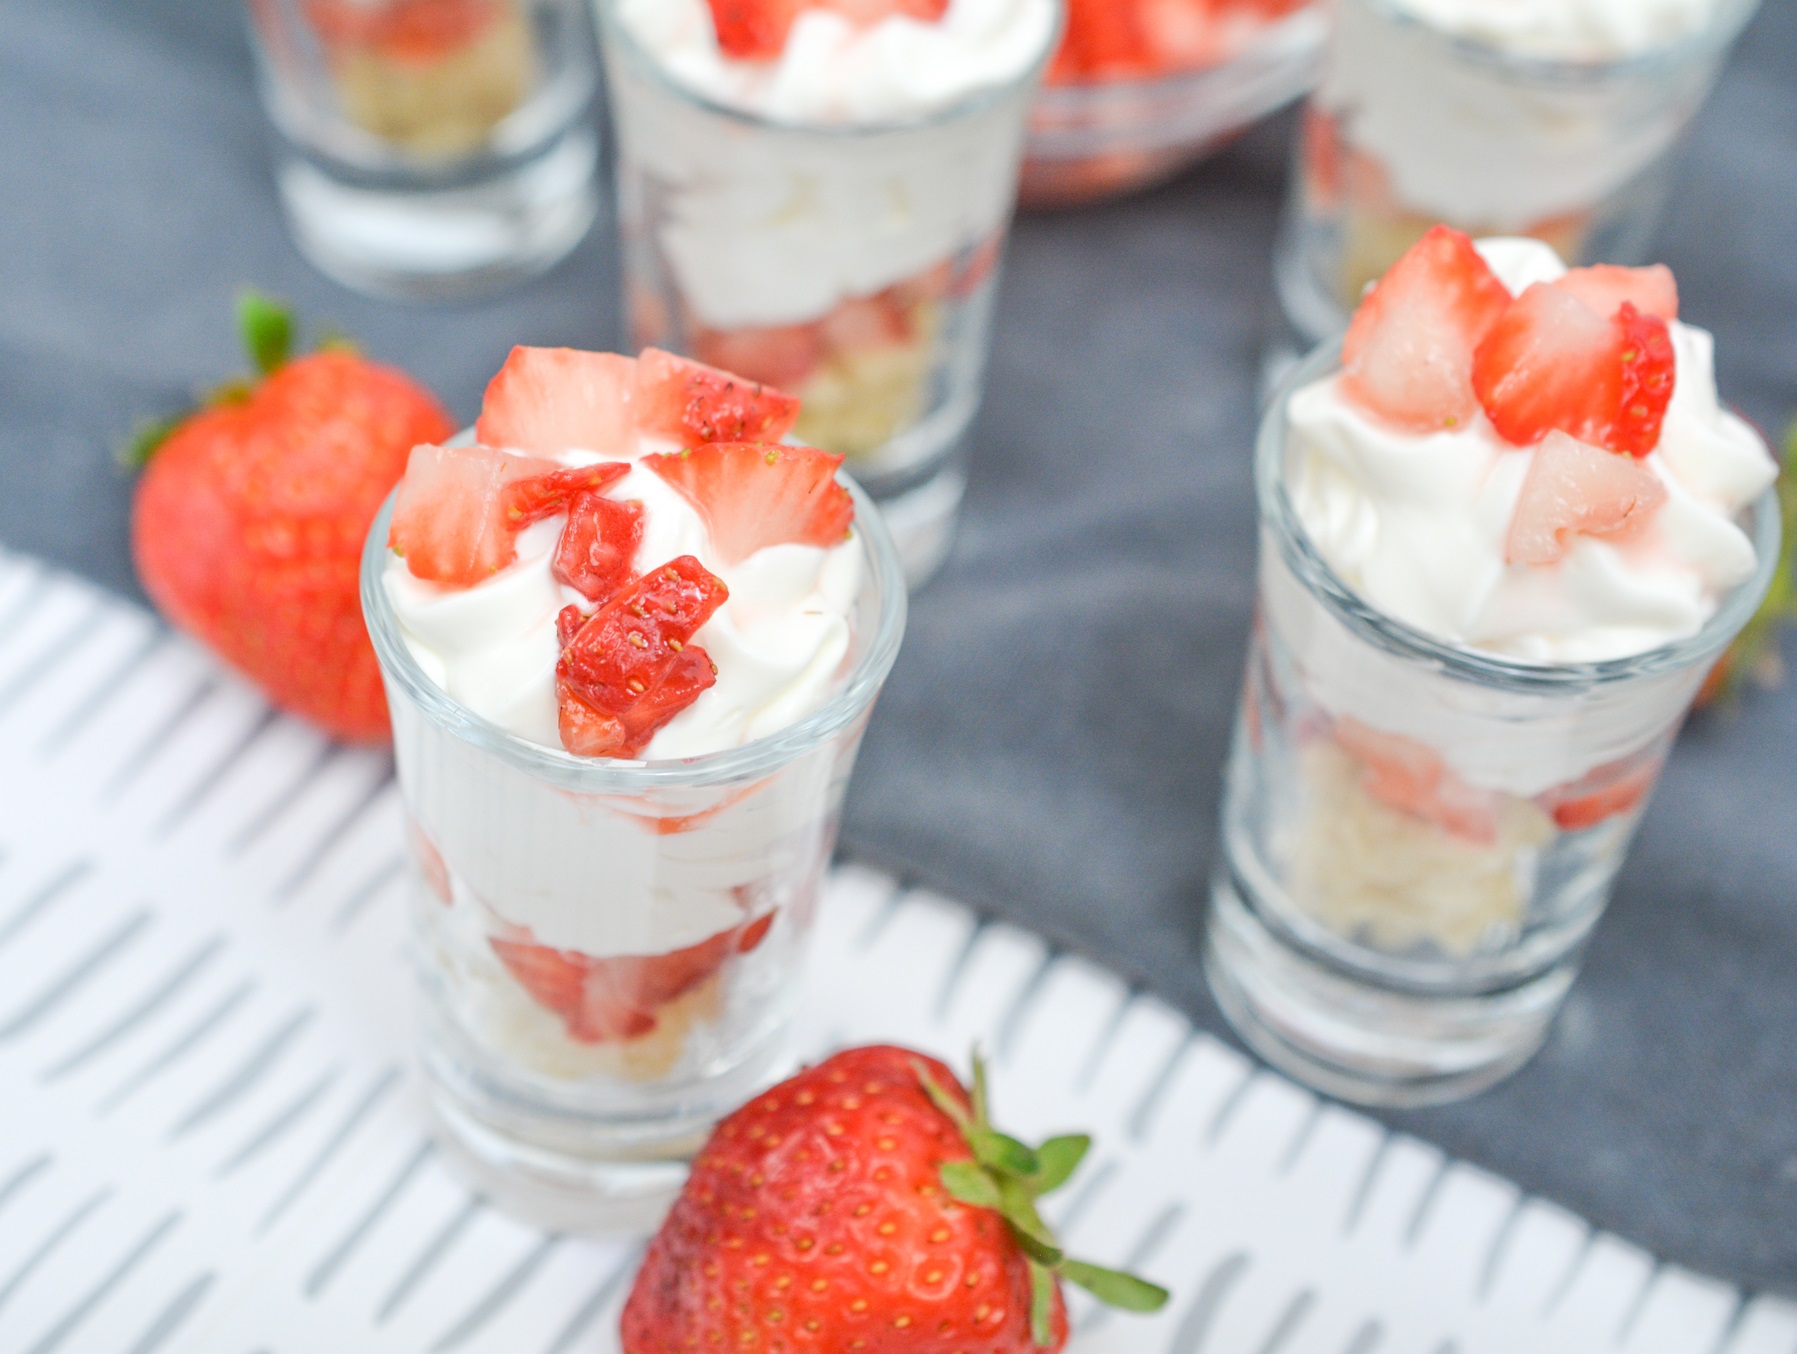 Keto Strawberry Shortcake Mini Desserts on a table.